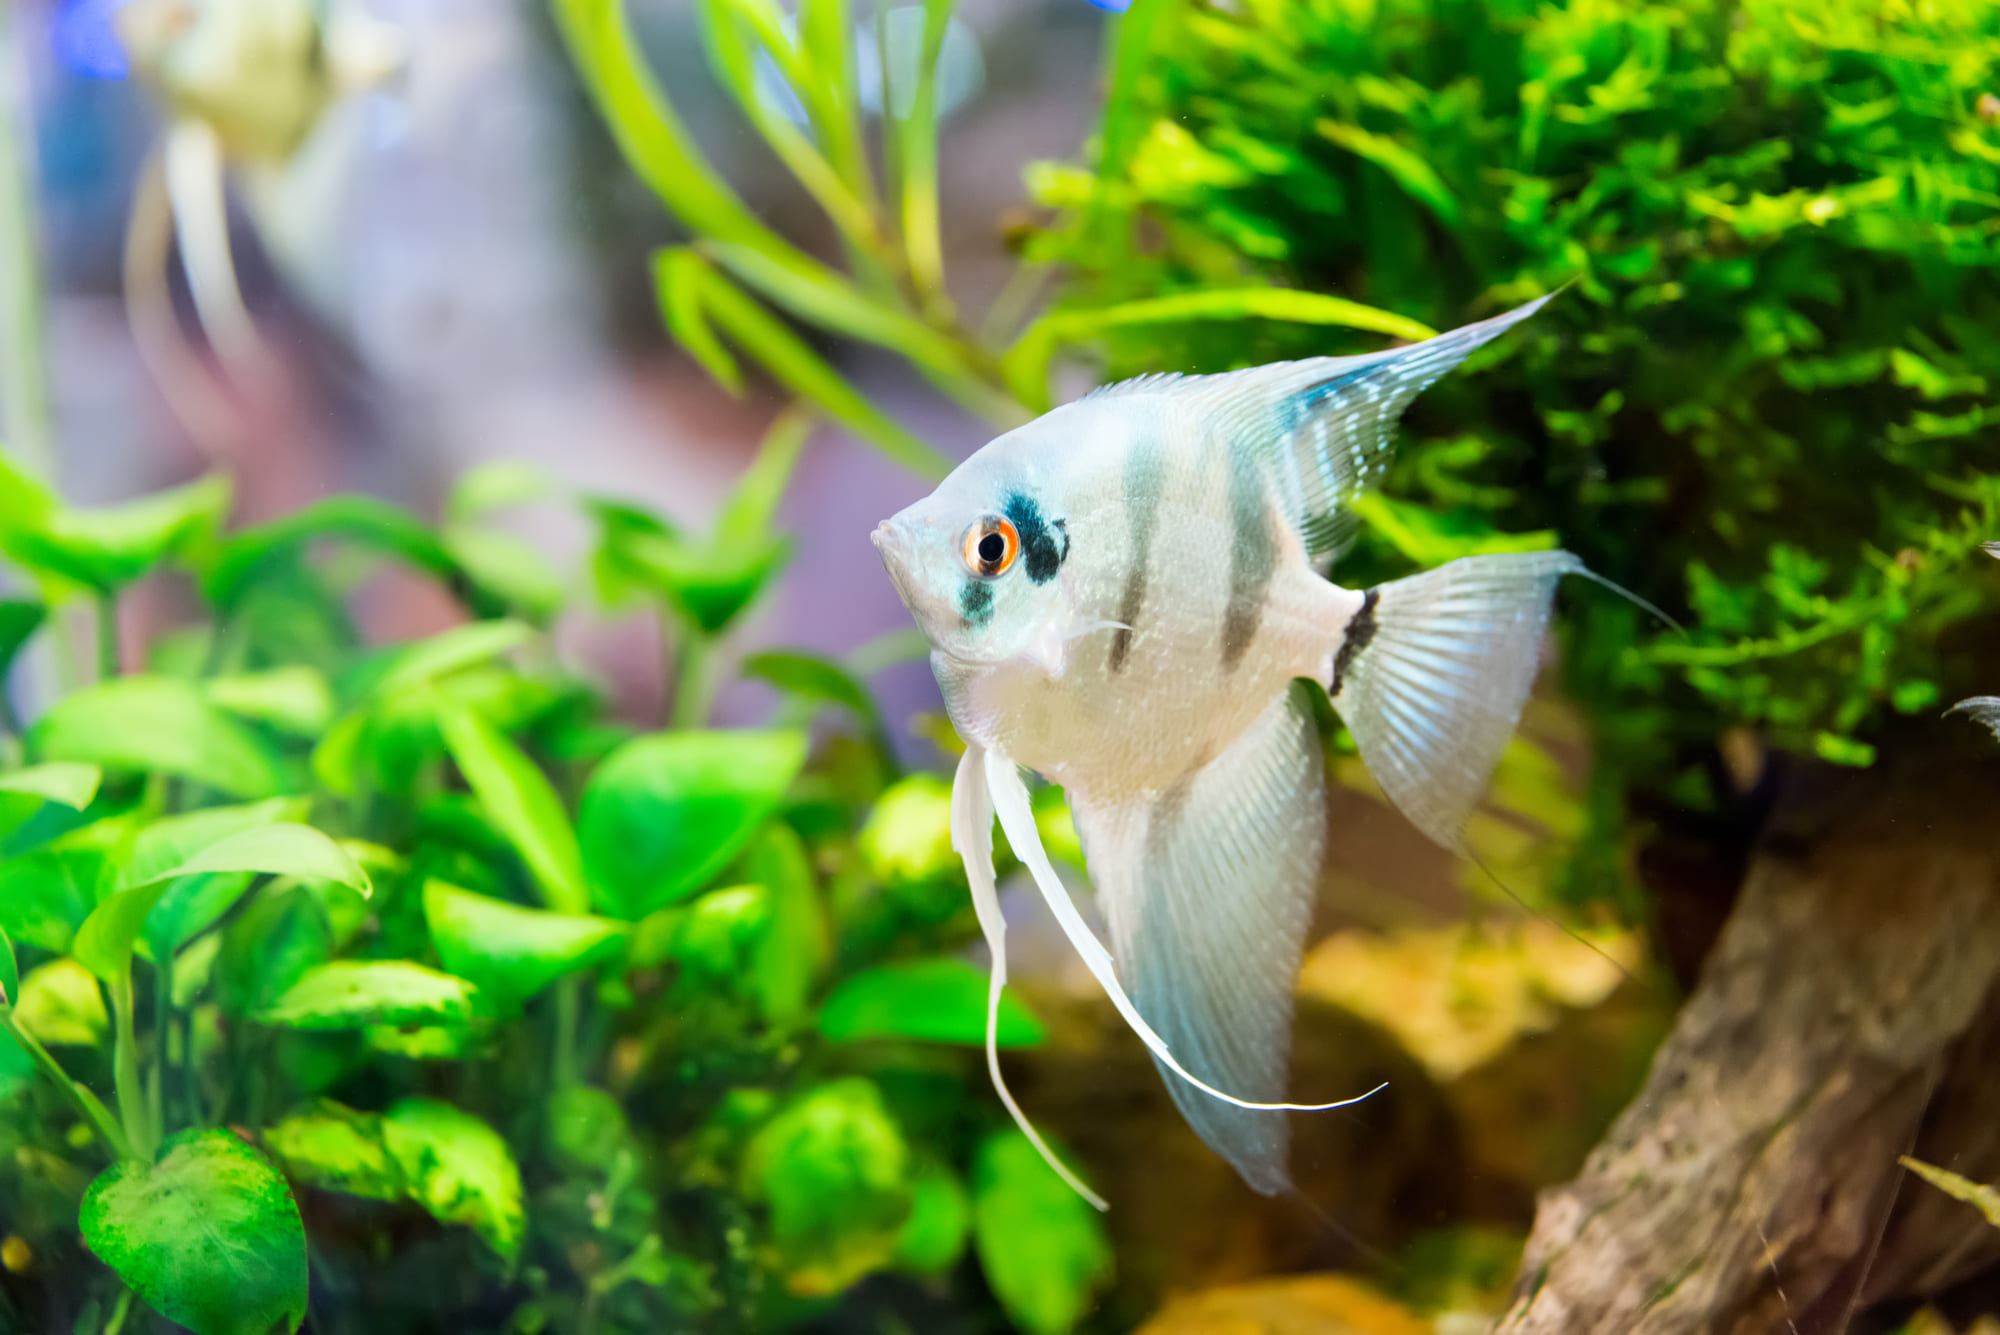 What needs do fish have? A friendly insight into aquaristics